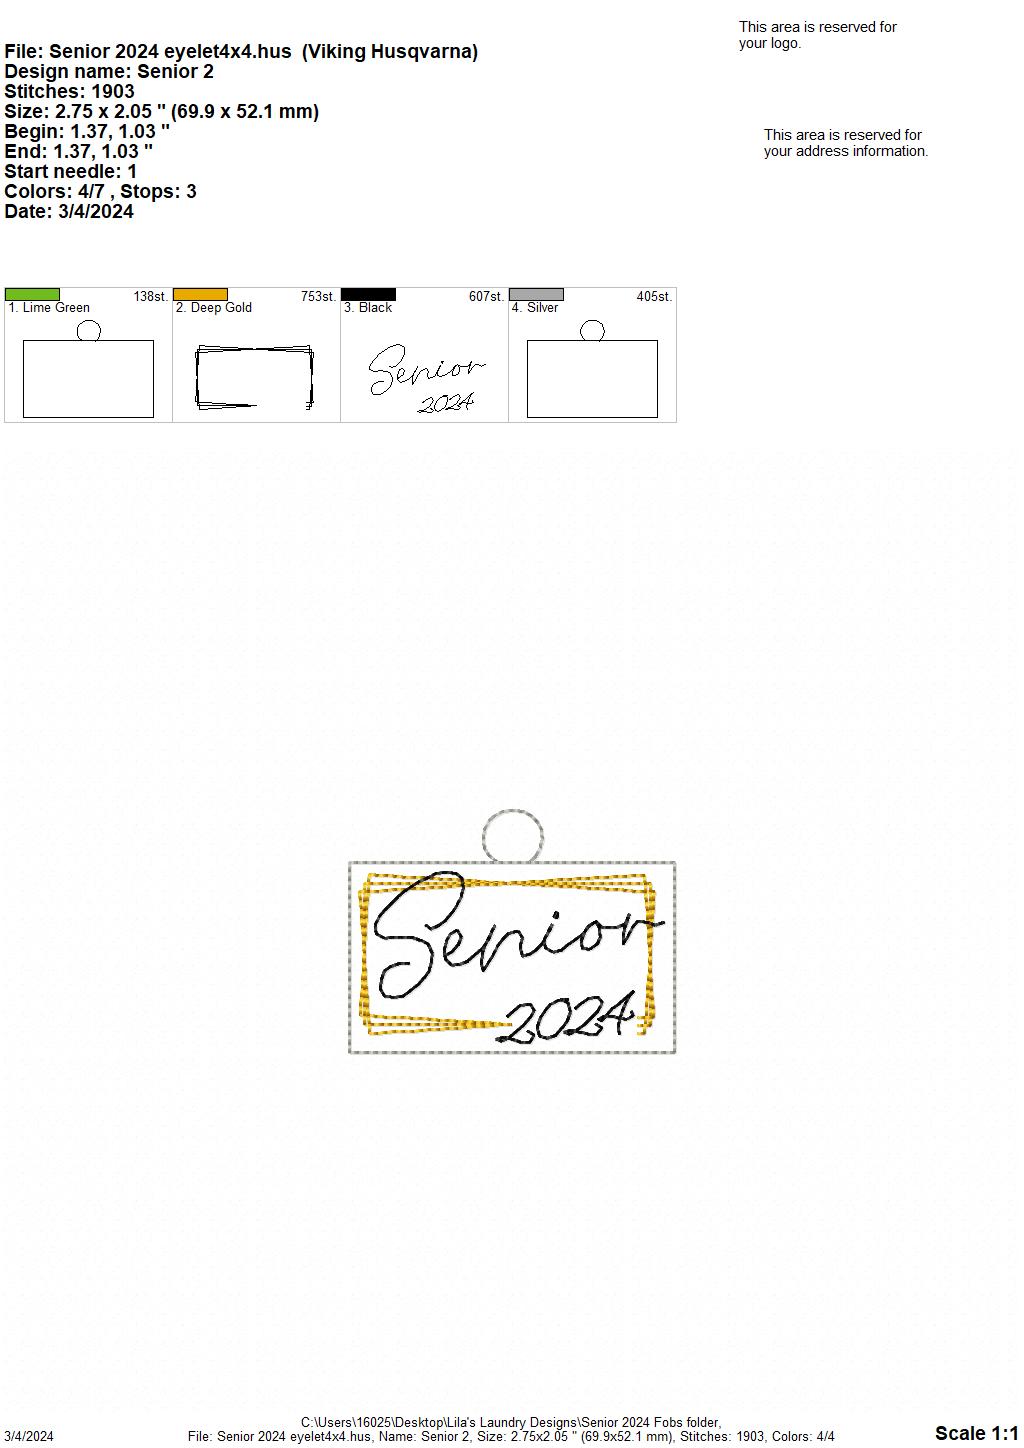 Senior 2024 Fobs - Digital Embroidery Design